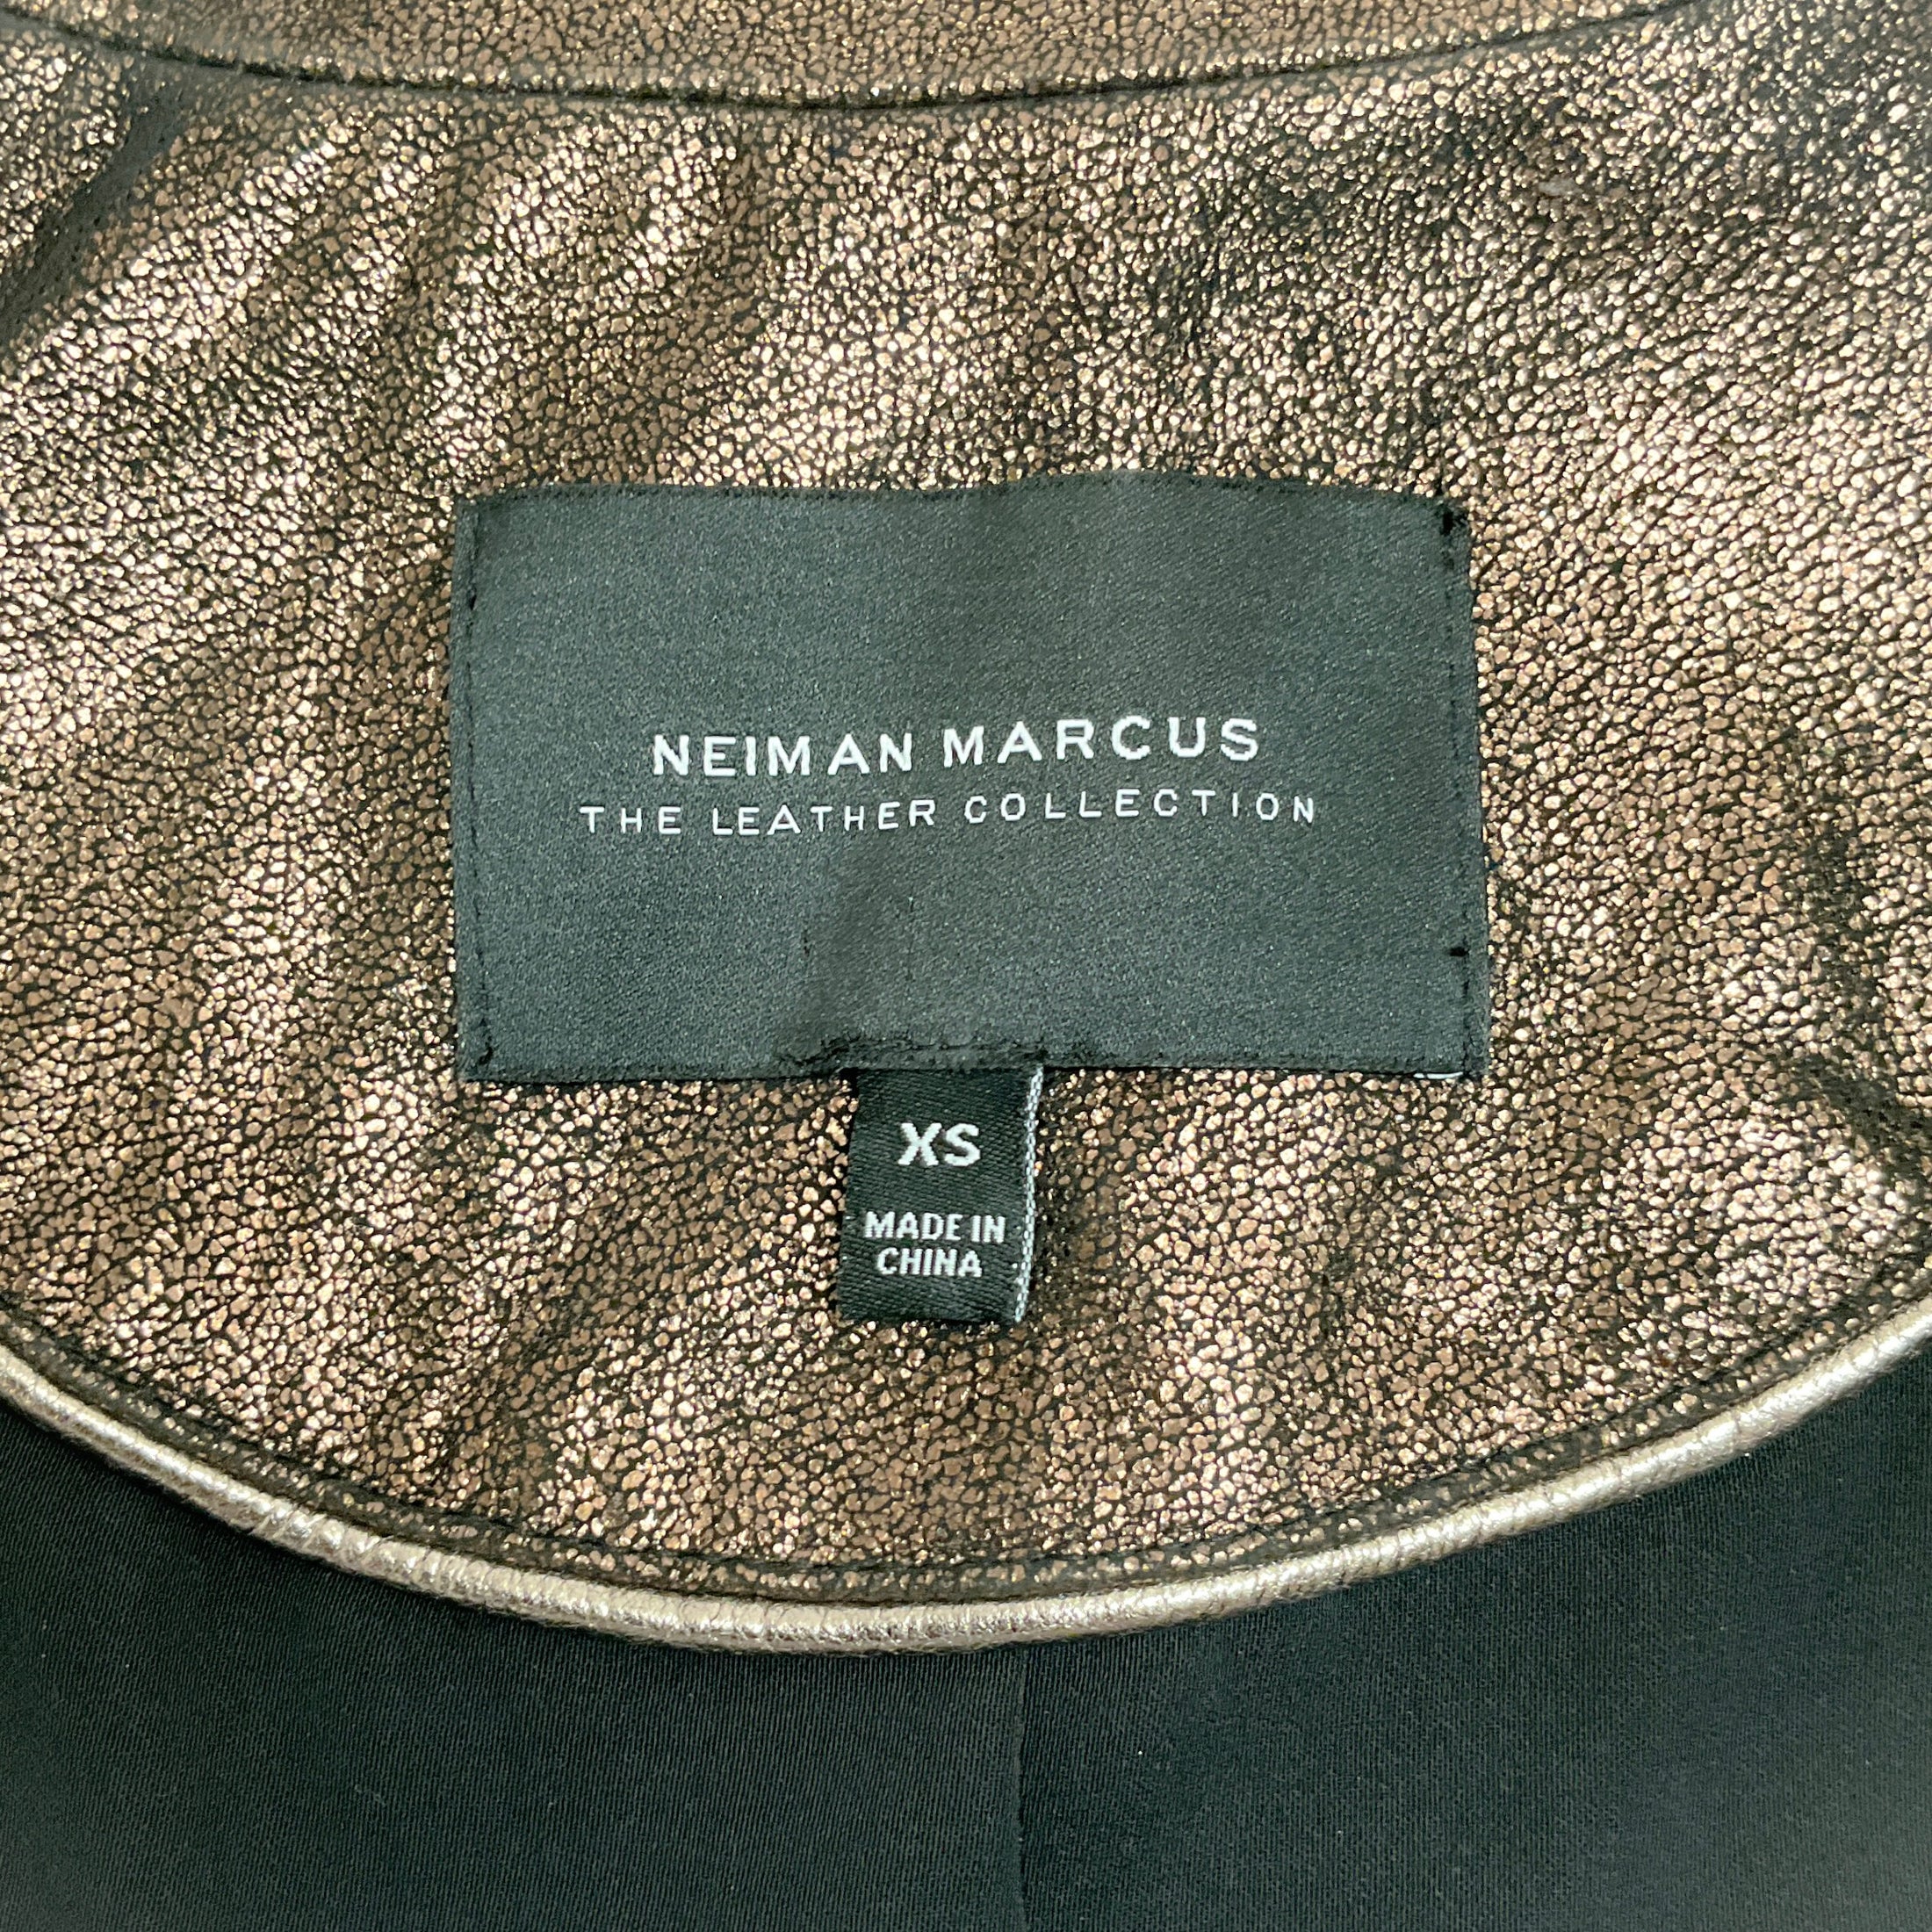 Neiman Marcus Bronze Leather Jacket with Monili Detail